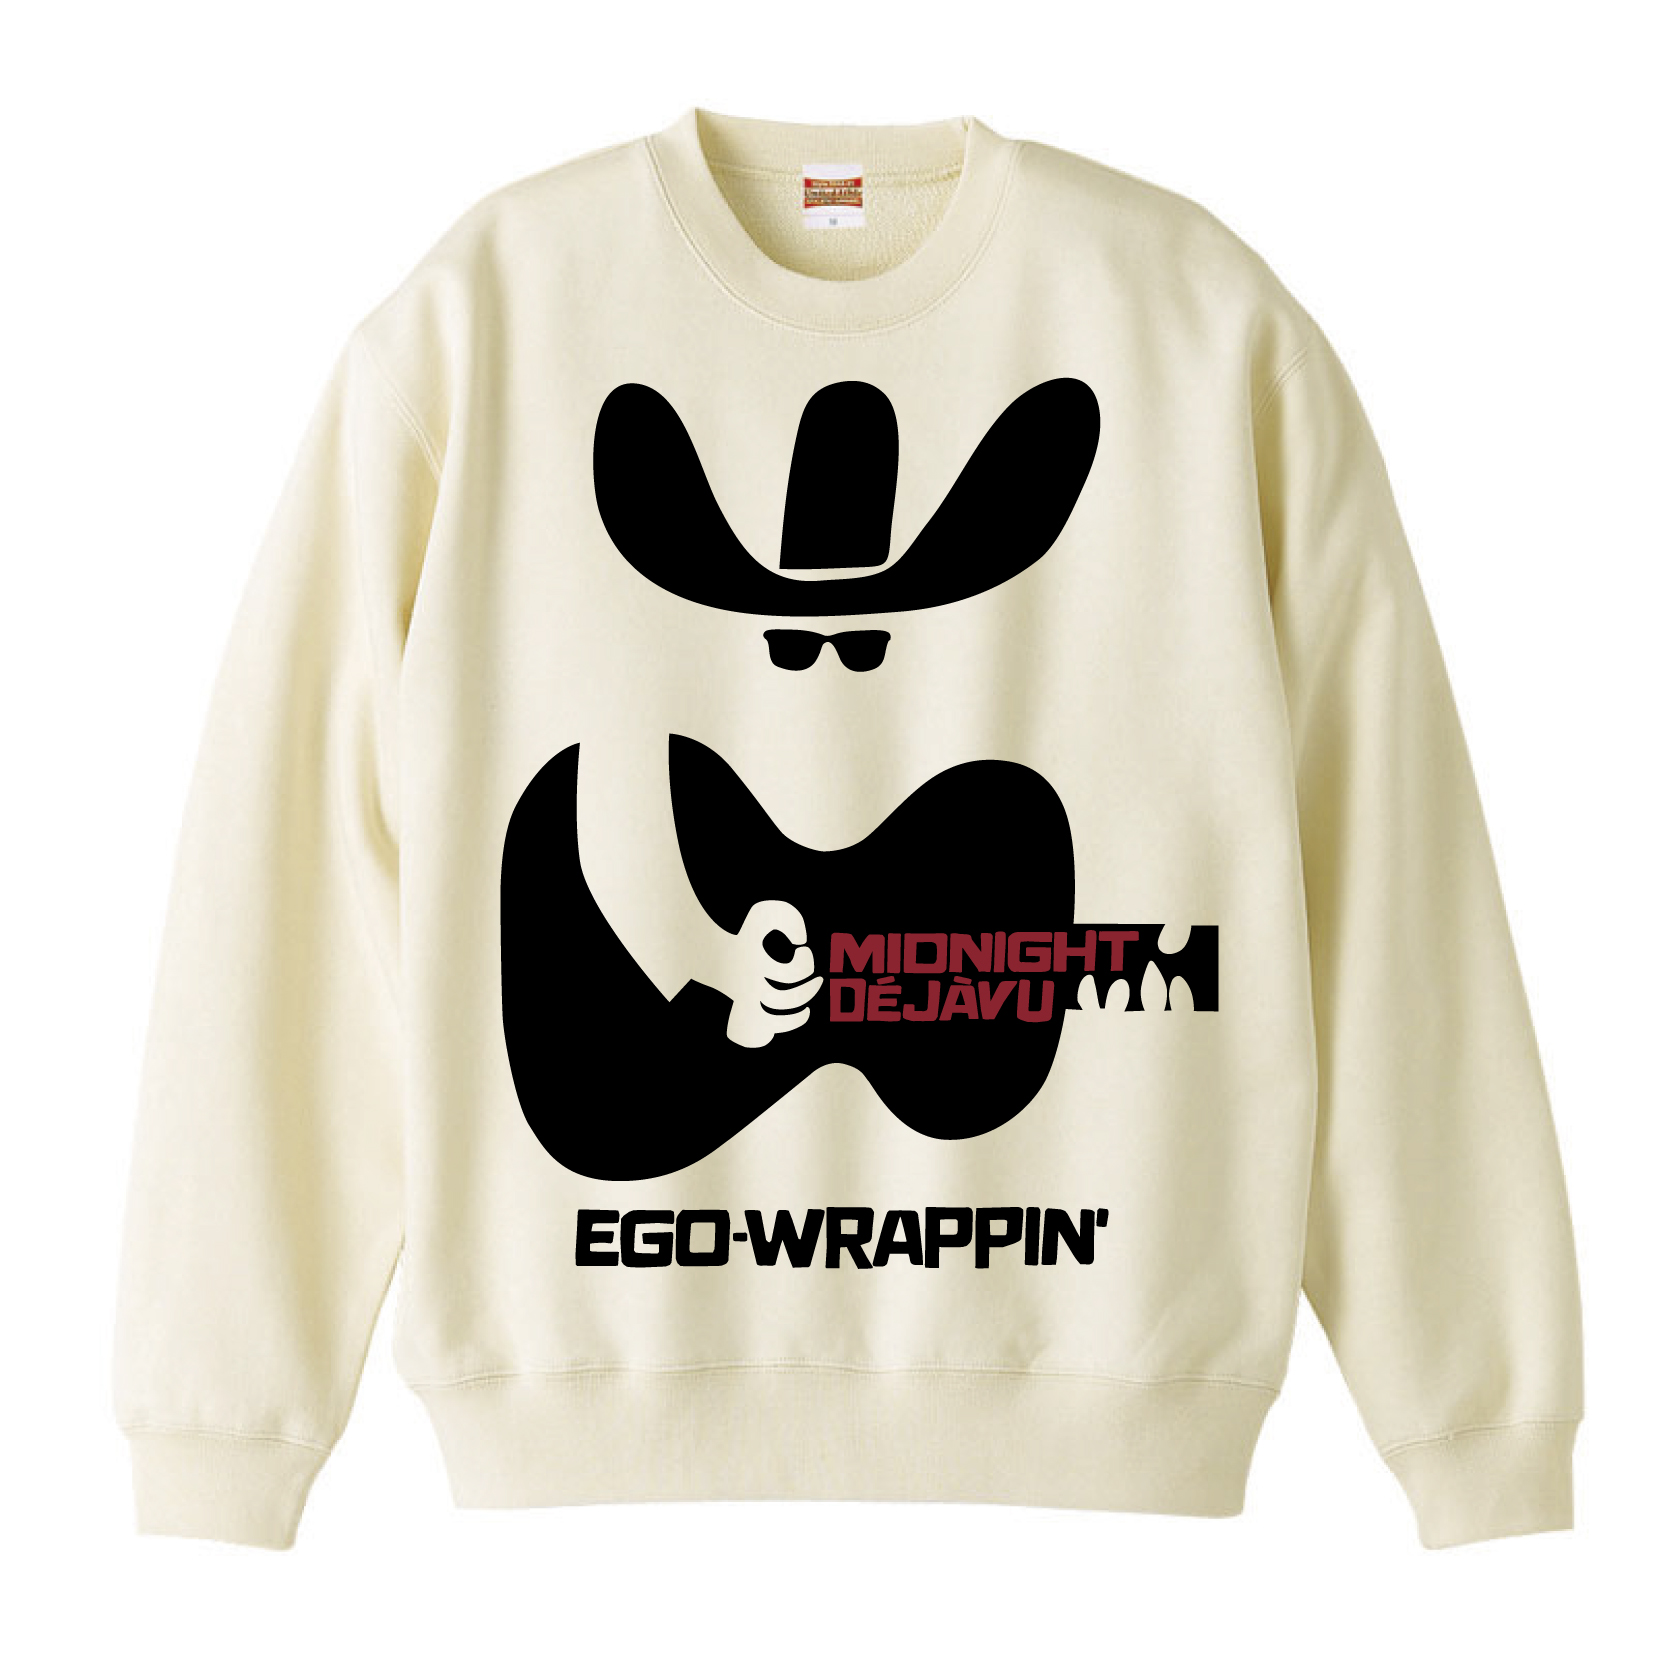 EGO-WRAPPIN’<br>「Midnight Dejavu」 2018 Merchandise